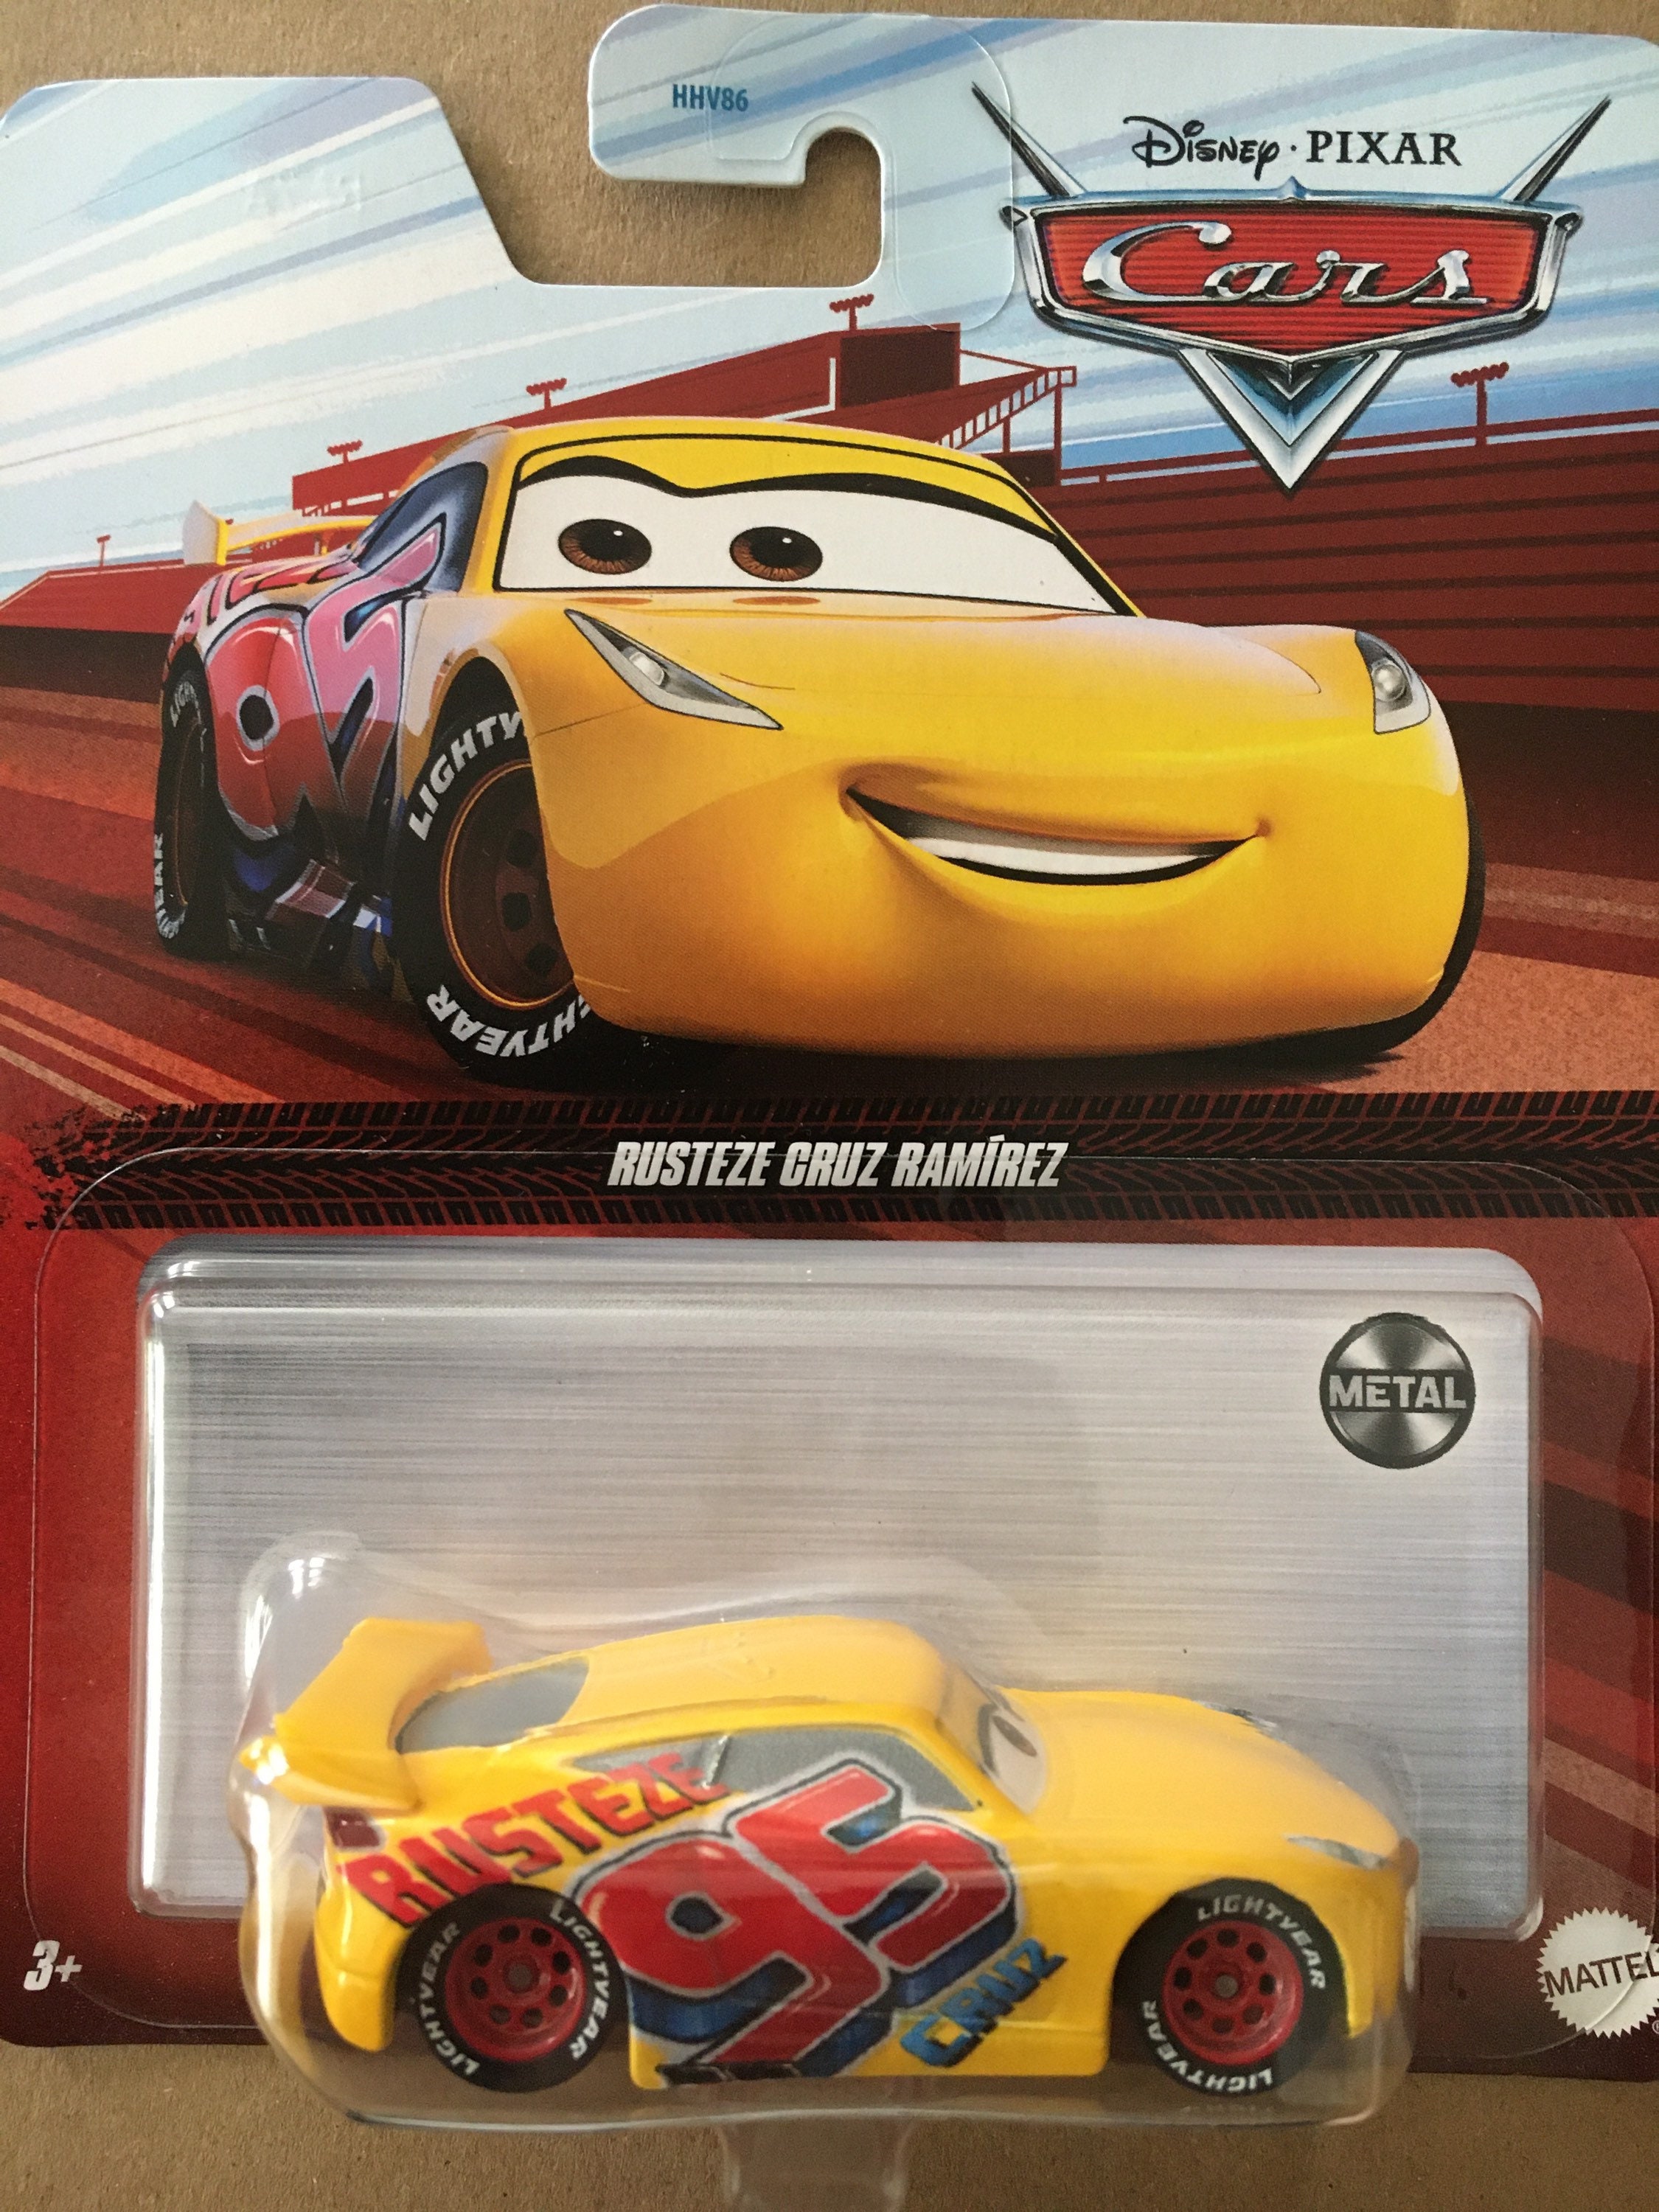 Mattel - Petite voiture - Cars - Cruz Ramirez